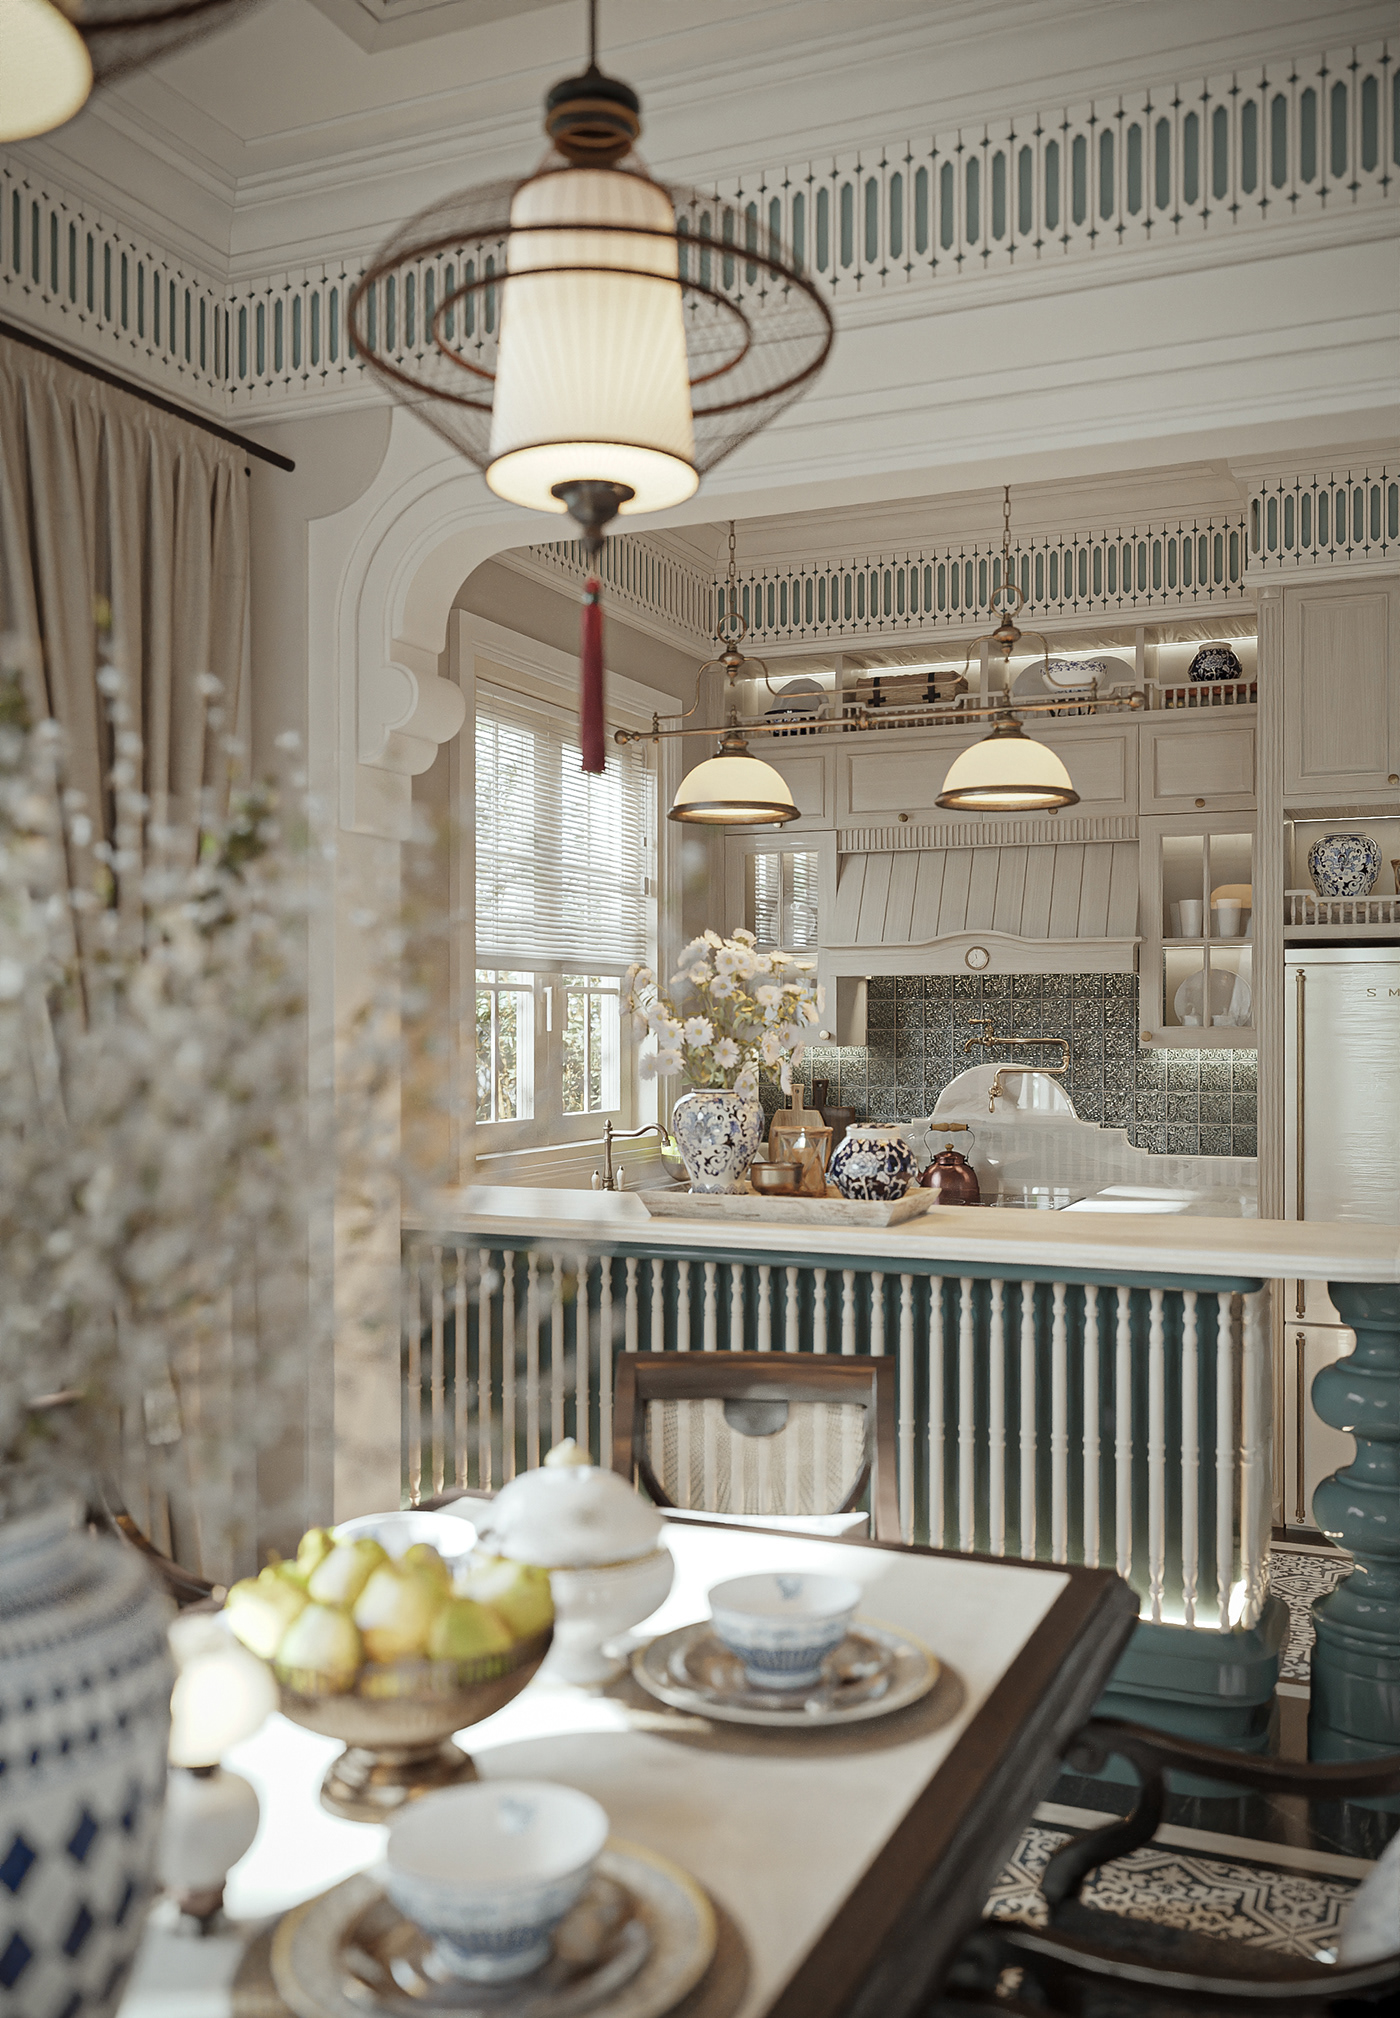 3ds max corona render  indochine living room Villa indochine style chinoiserie design Behance Indochine interior